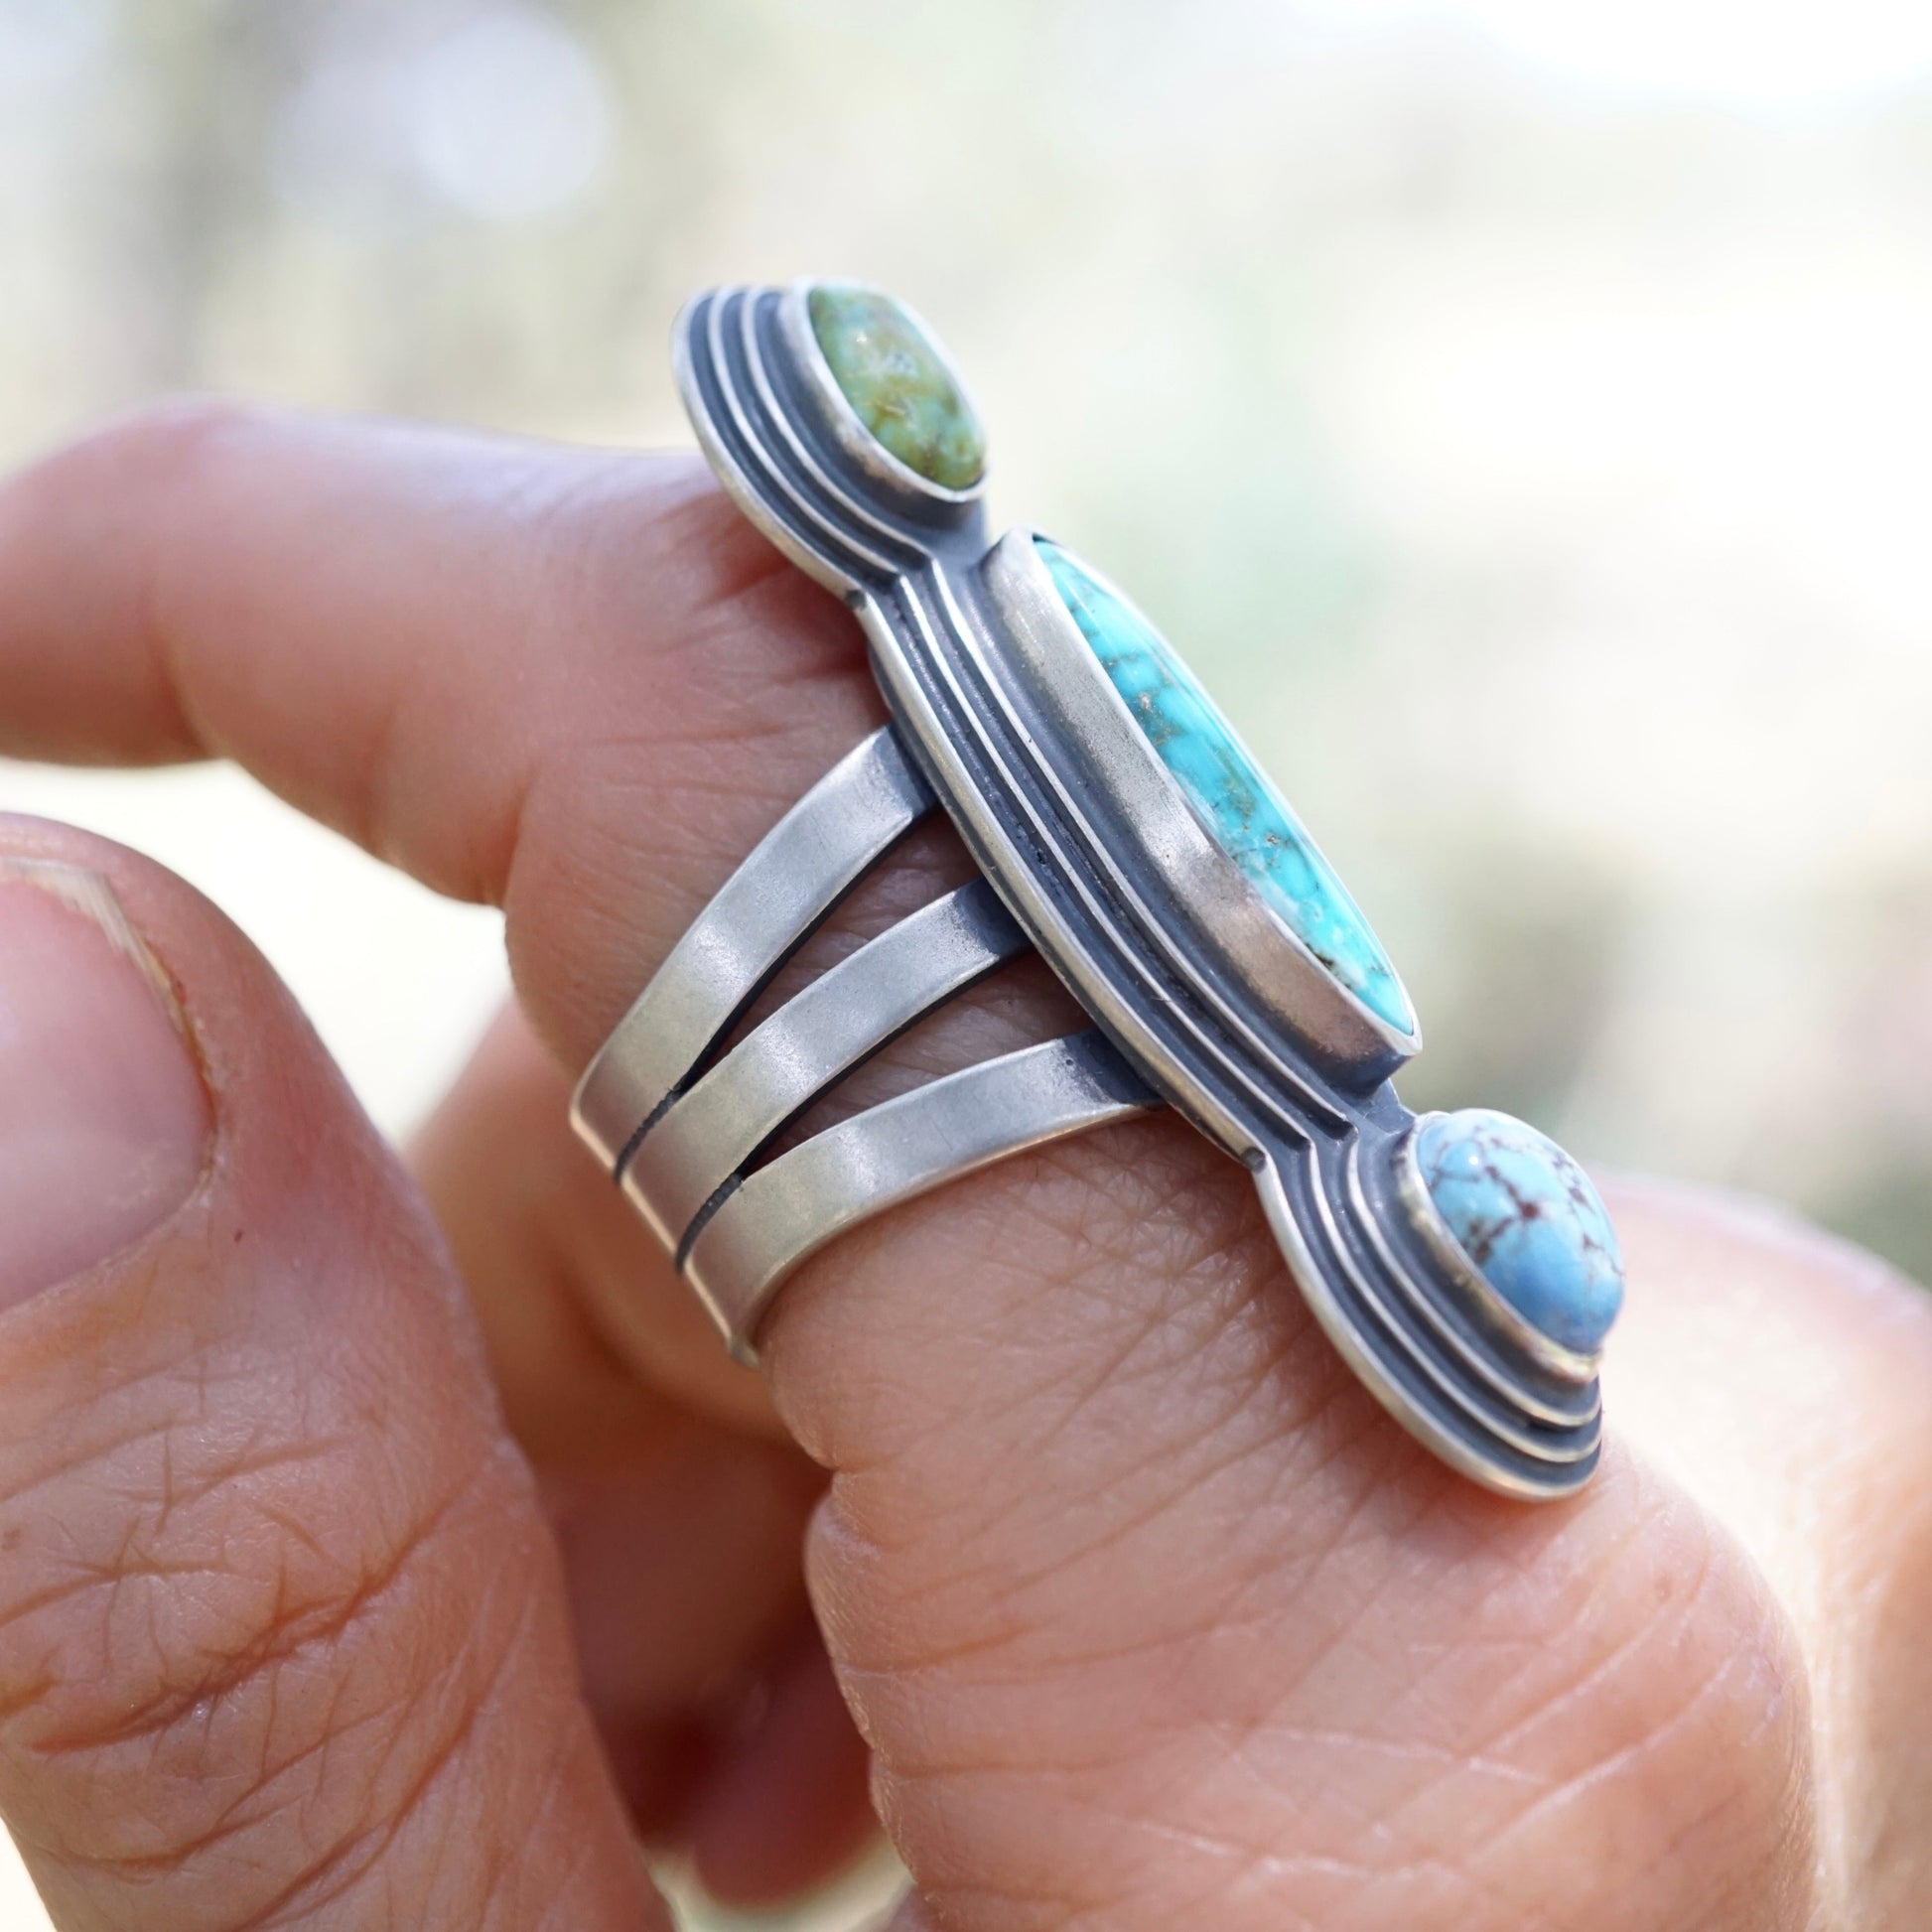 colorful turquoise power ring - size 7.5/7.75 - Lumenrose